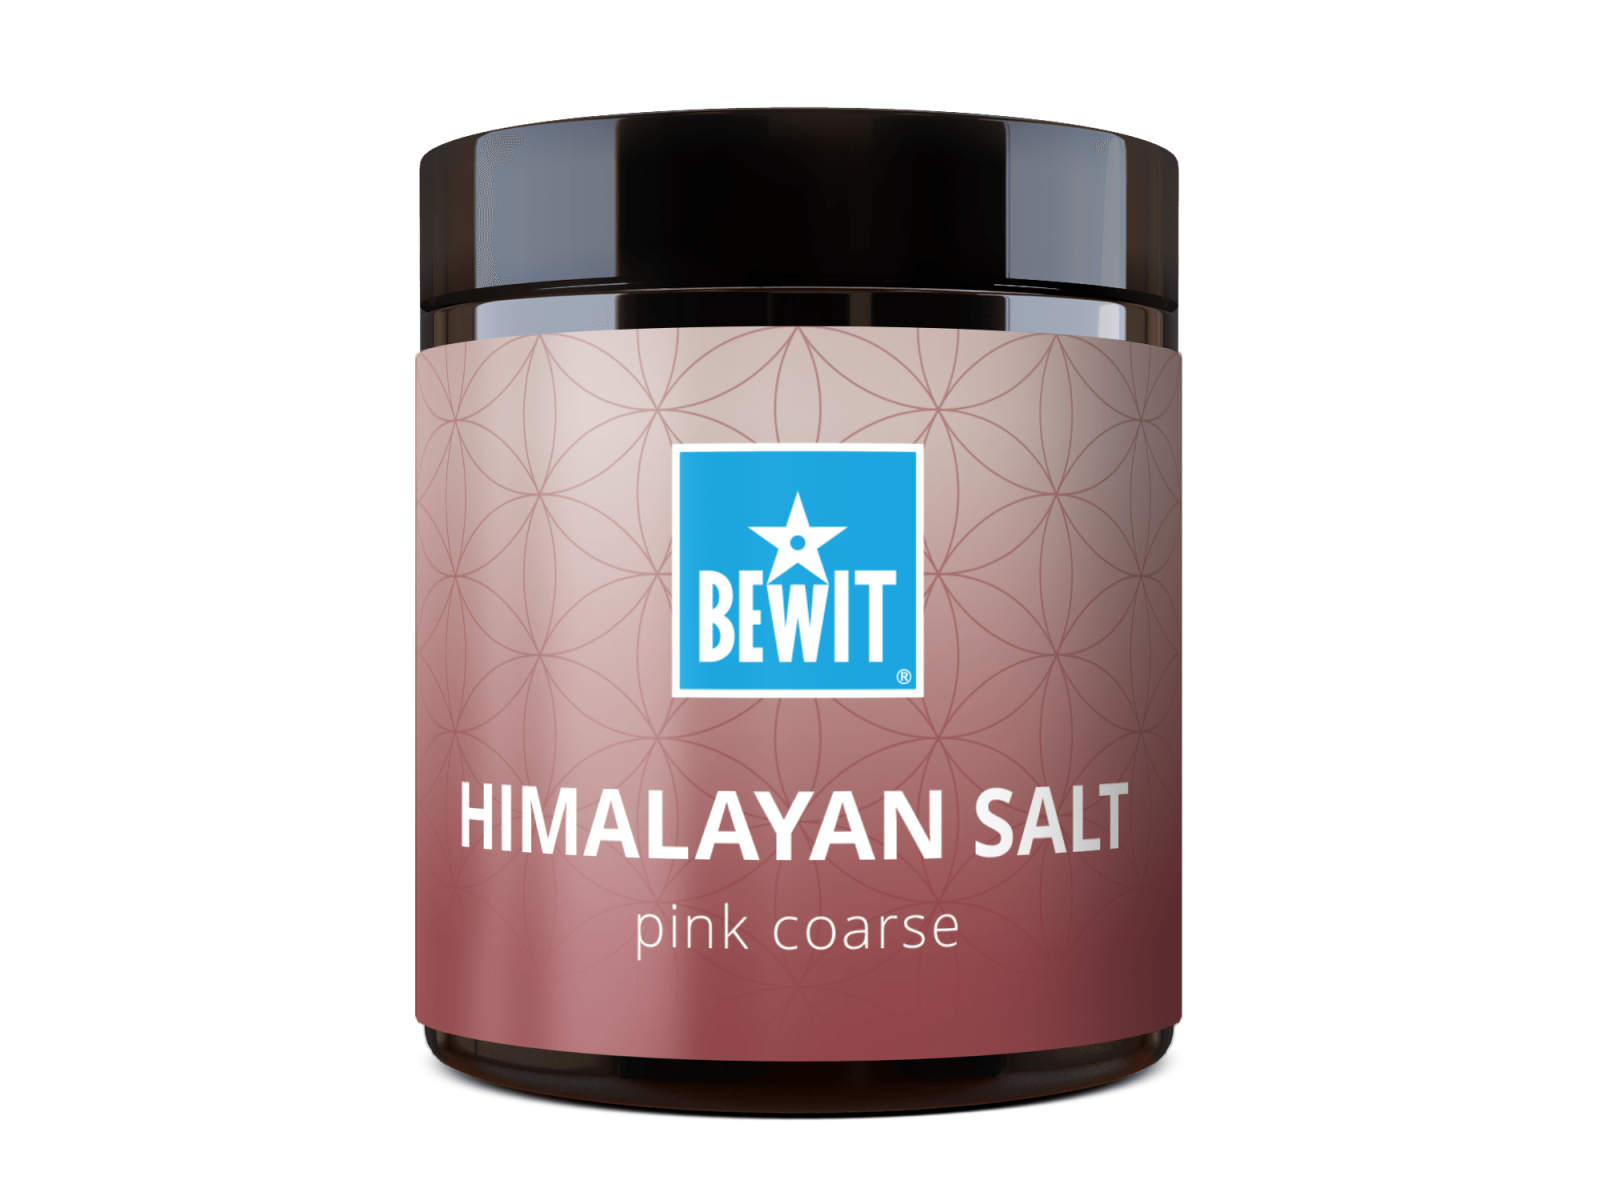 BEWIT Himalayan salt pink, coarse grain - A superfood - 2